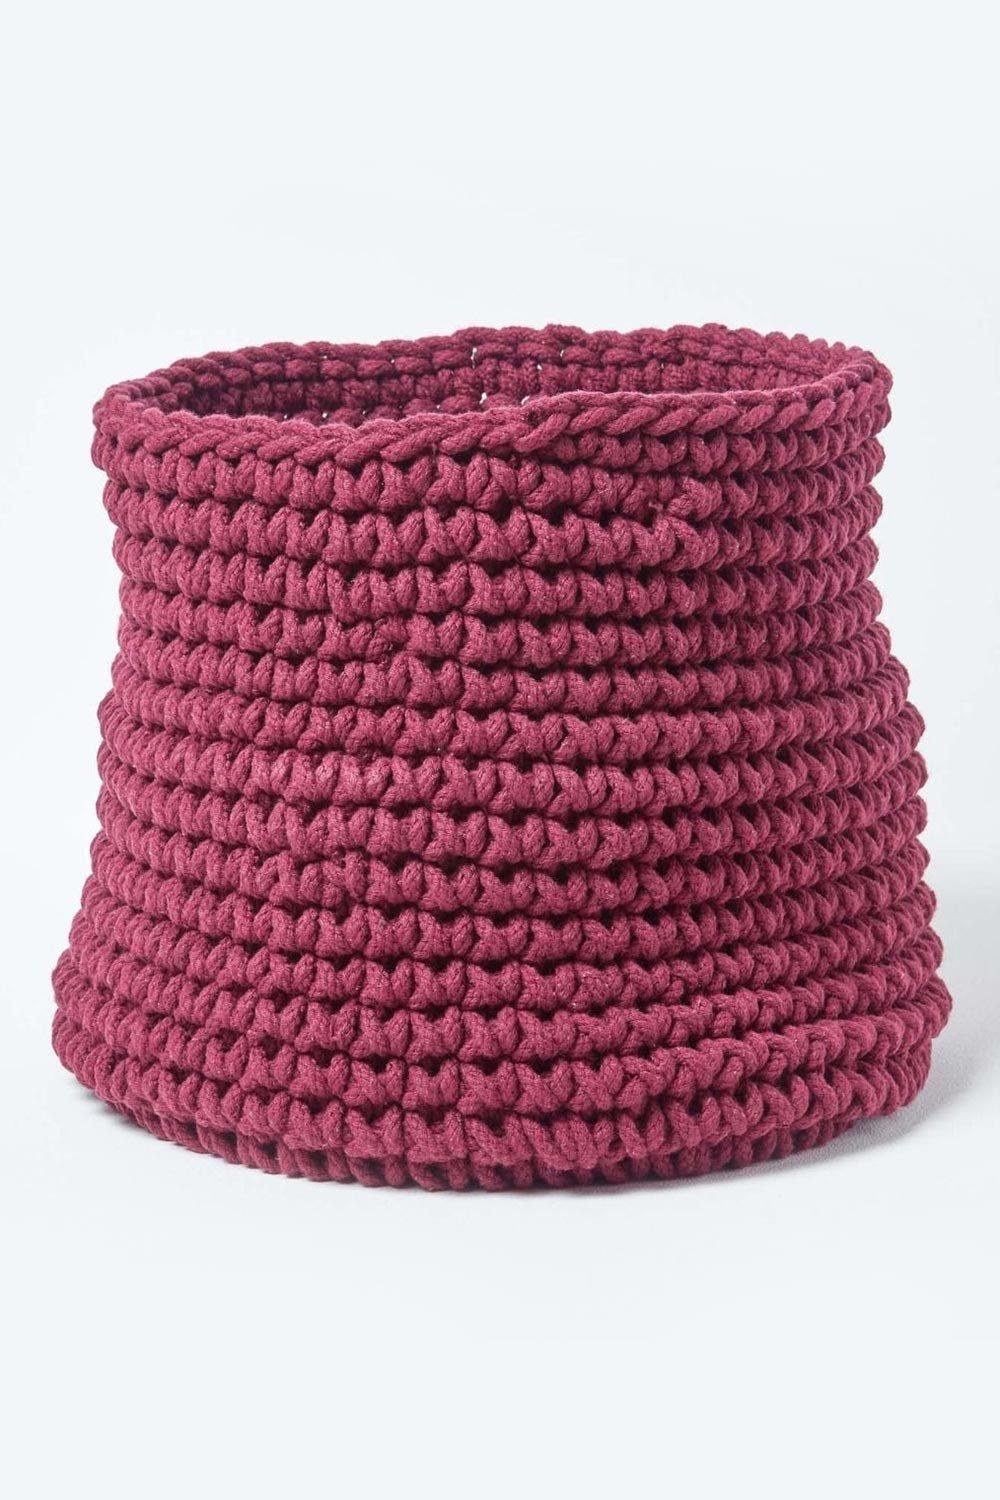 Homescapes Cotton Knitted Round Storage Basket, 42 x 37 cm|plum